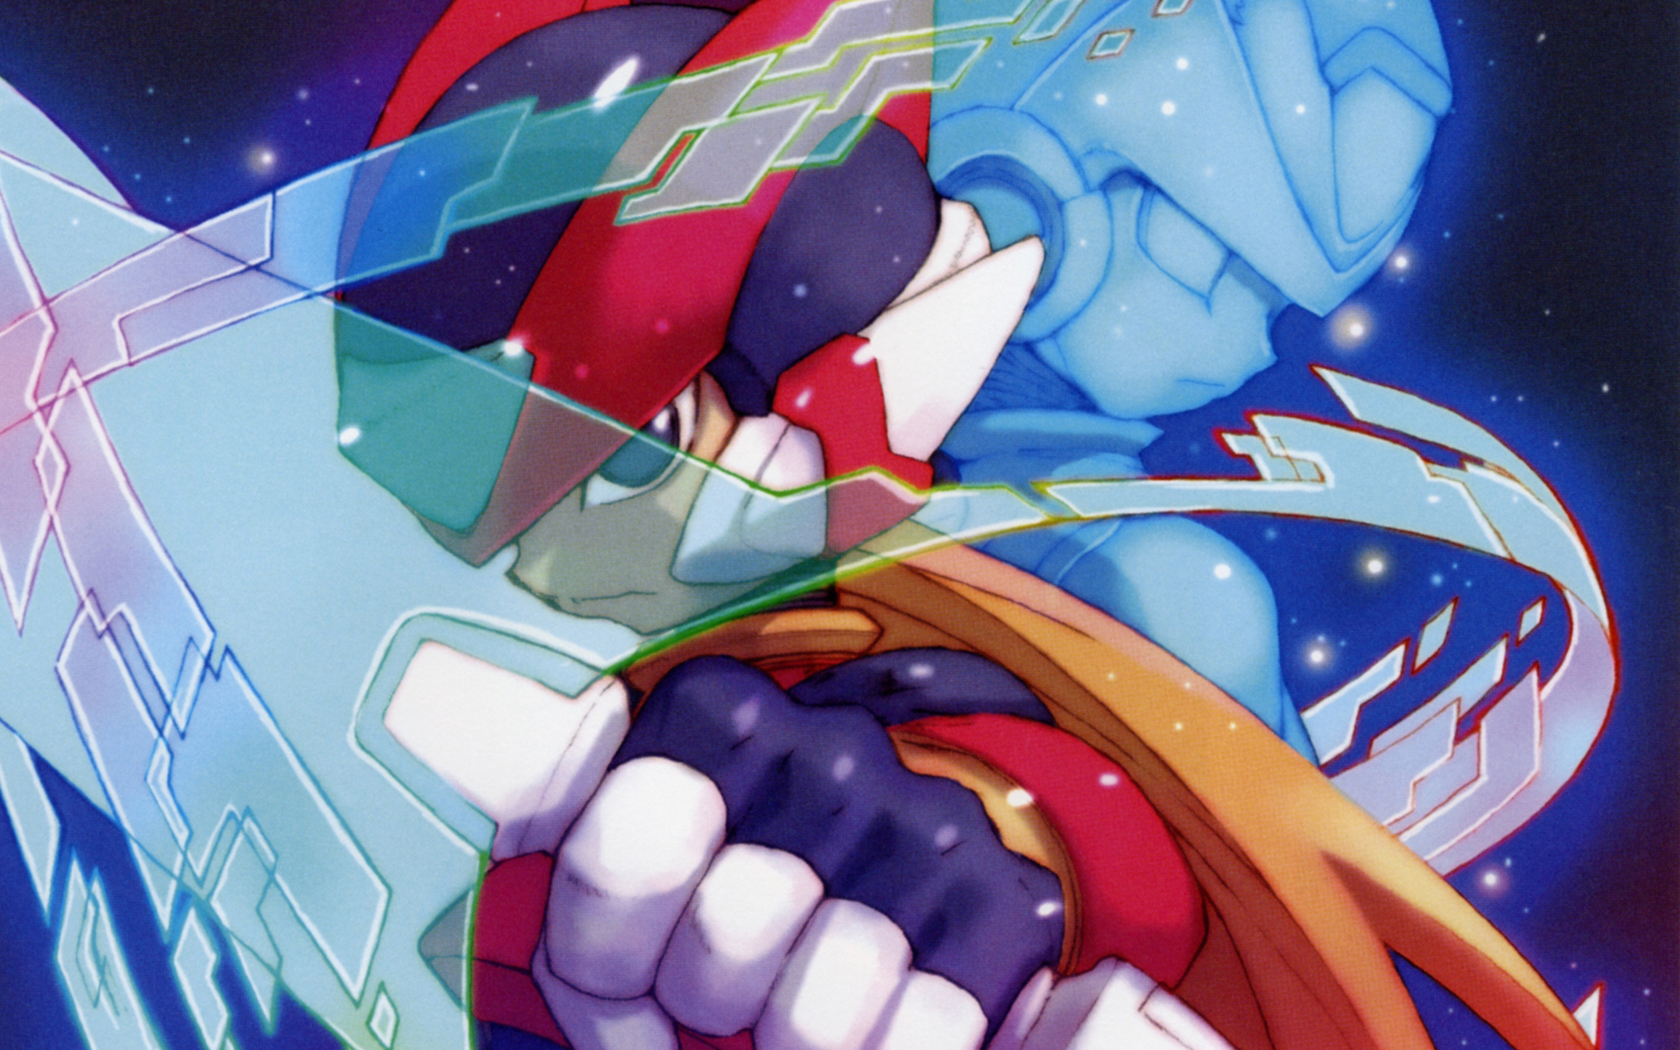 Mega Man Zero Wallpapers